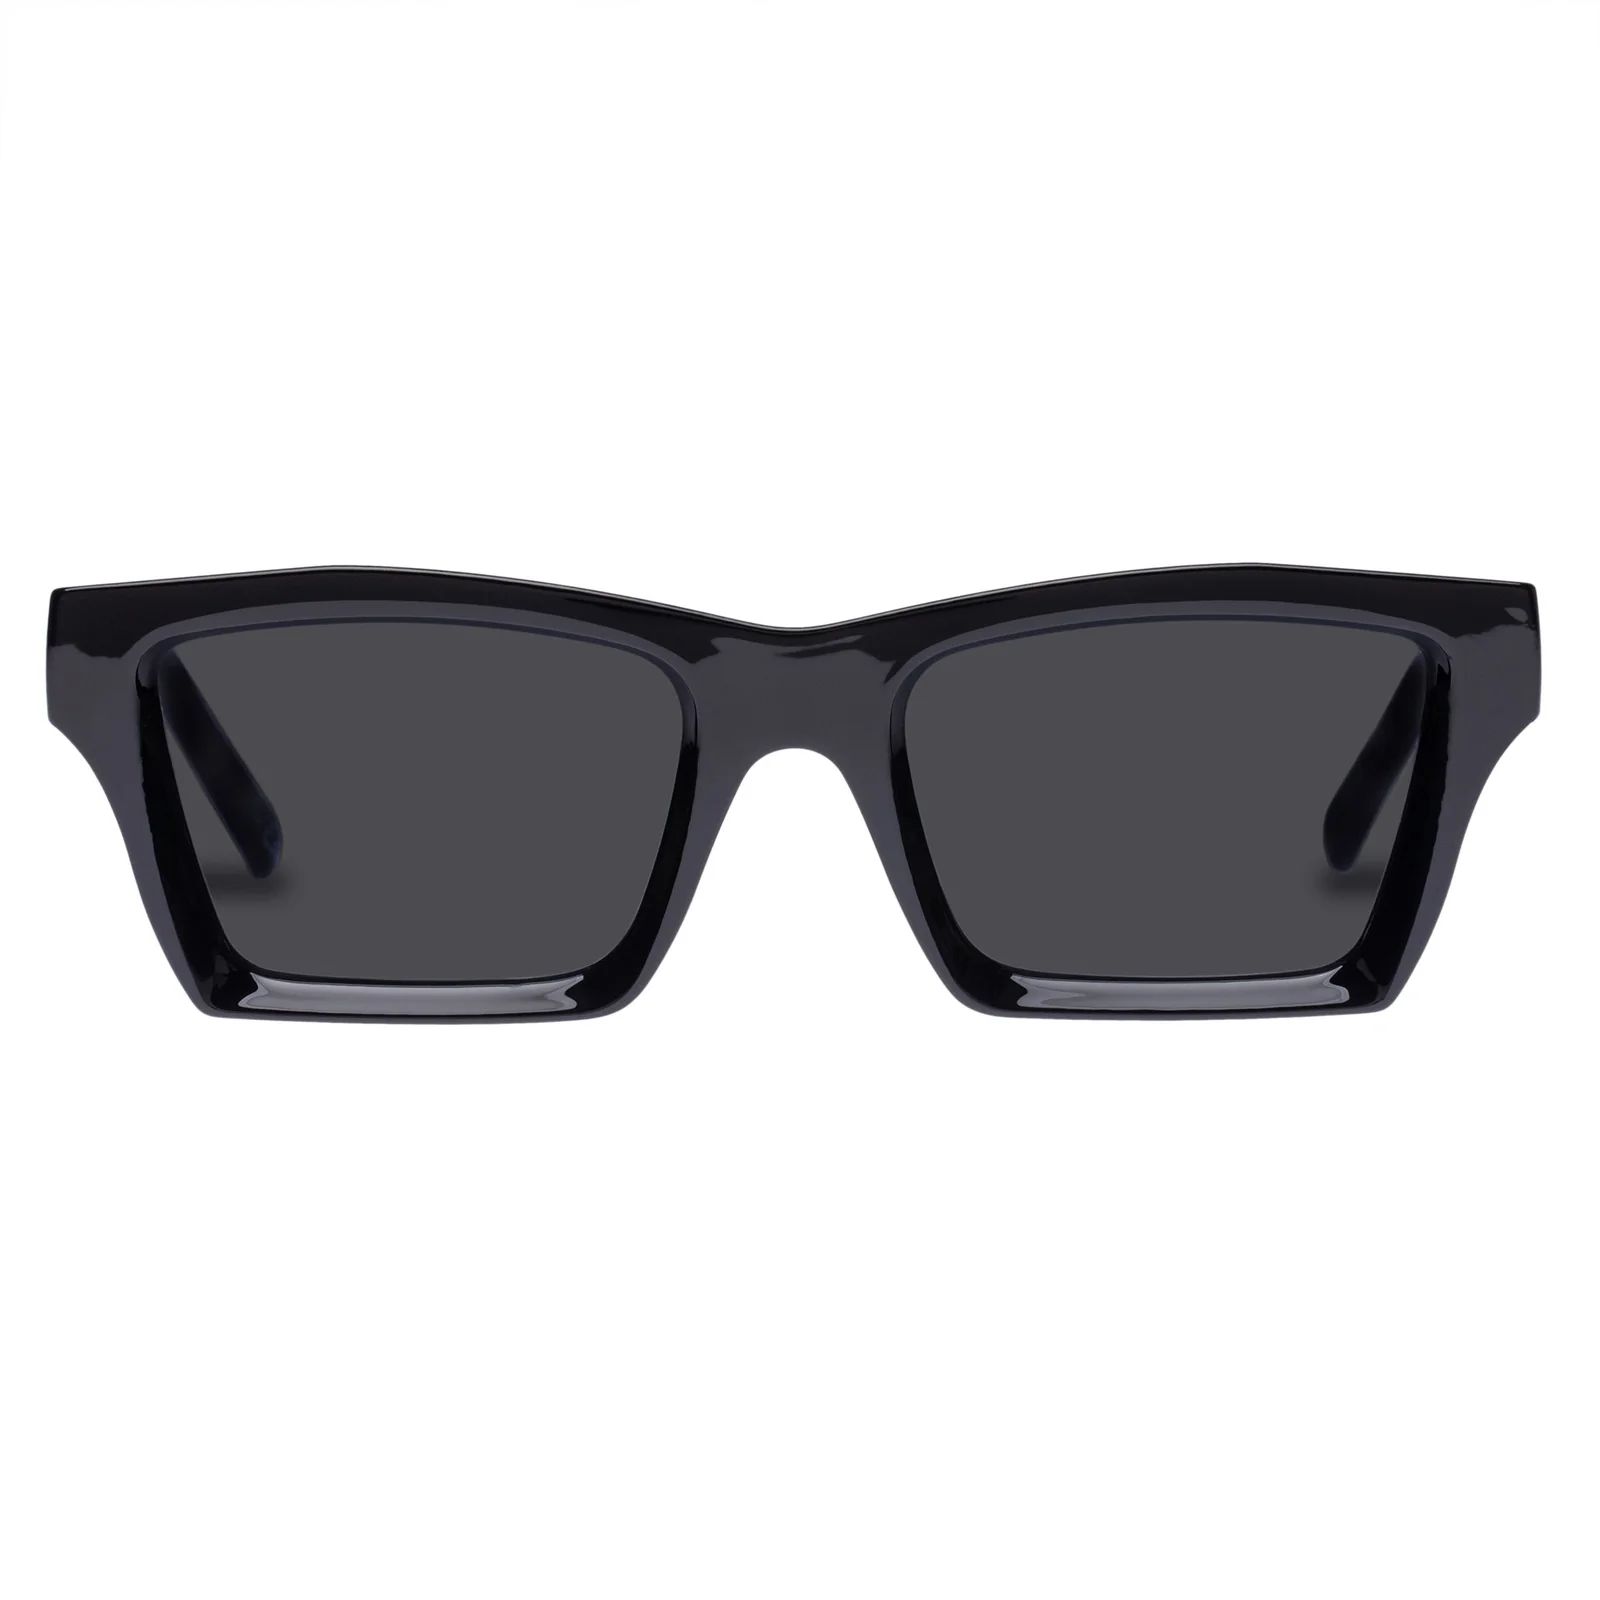 SOMETHING | BLACK | Le Specs (Sunglasses)